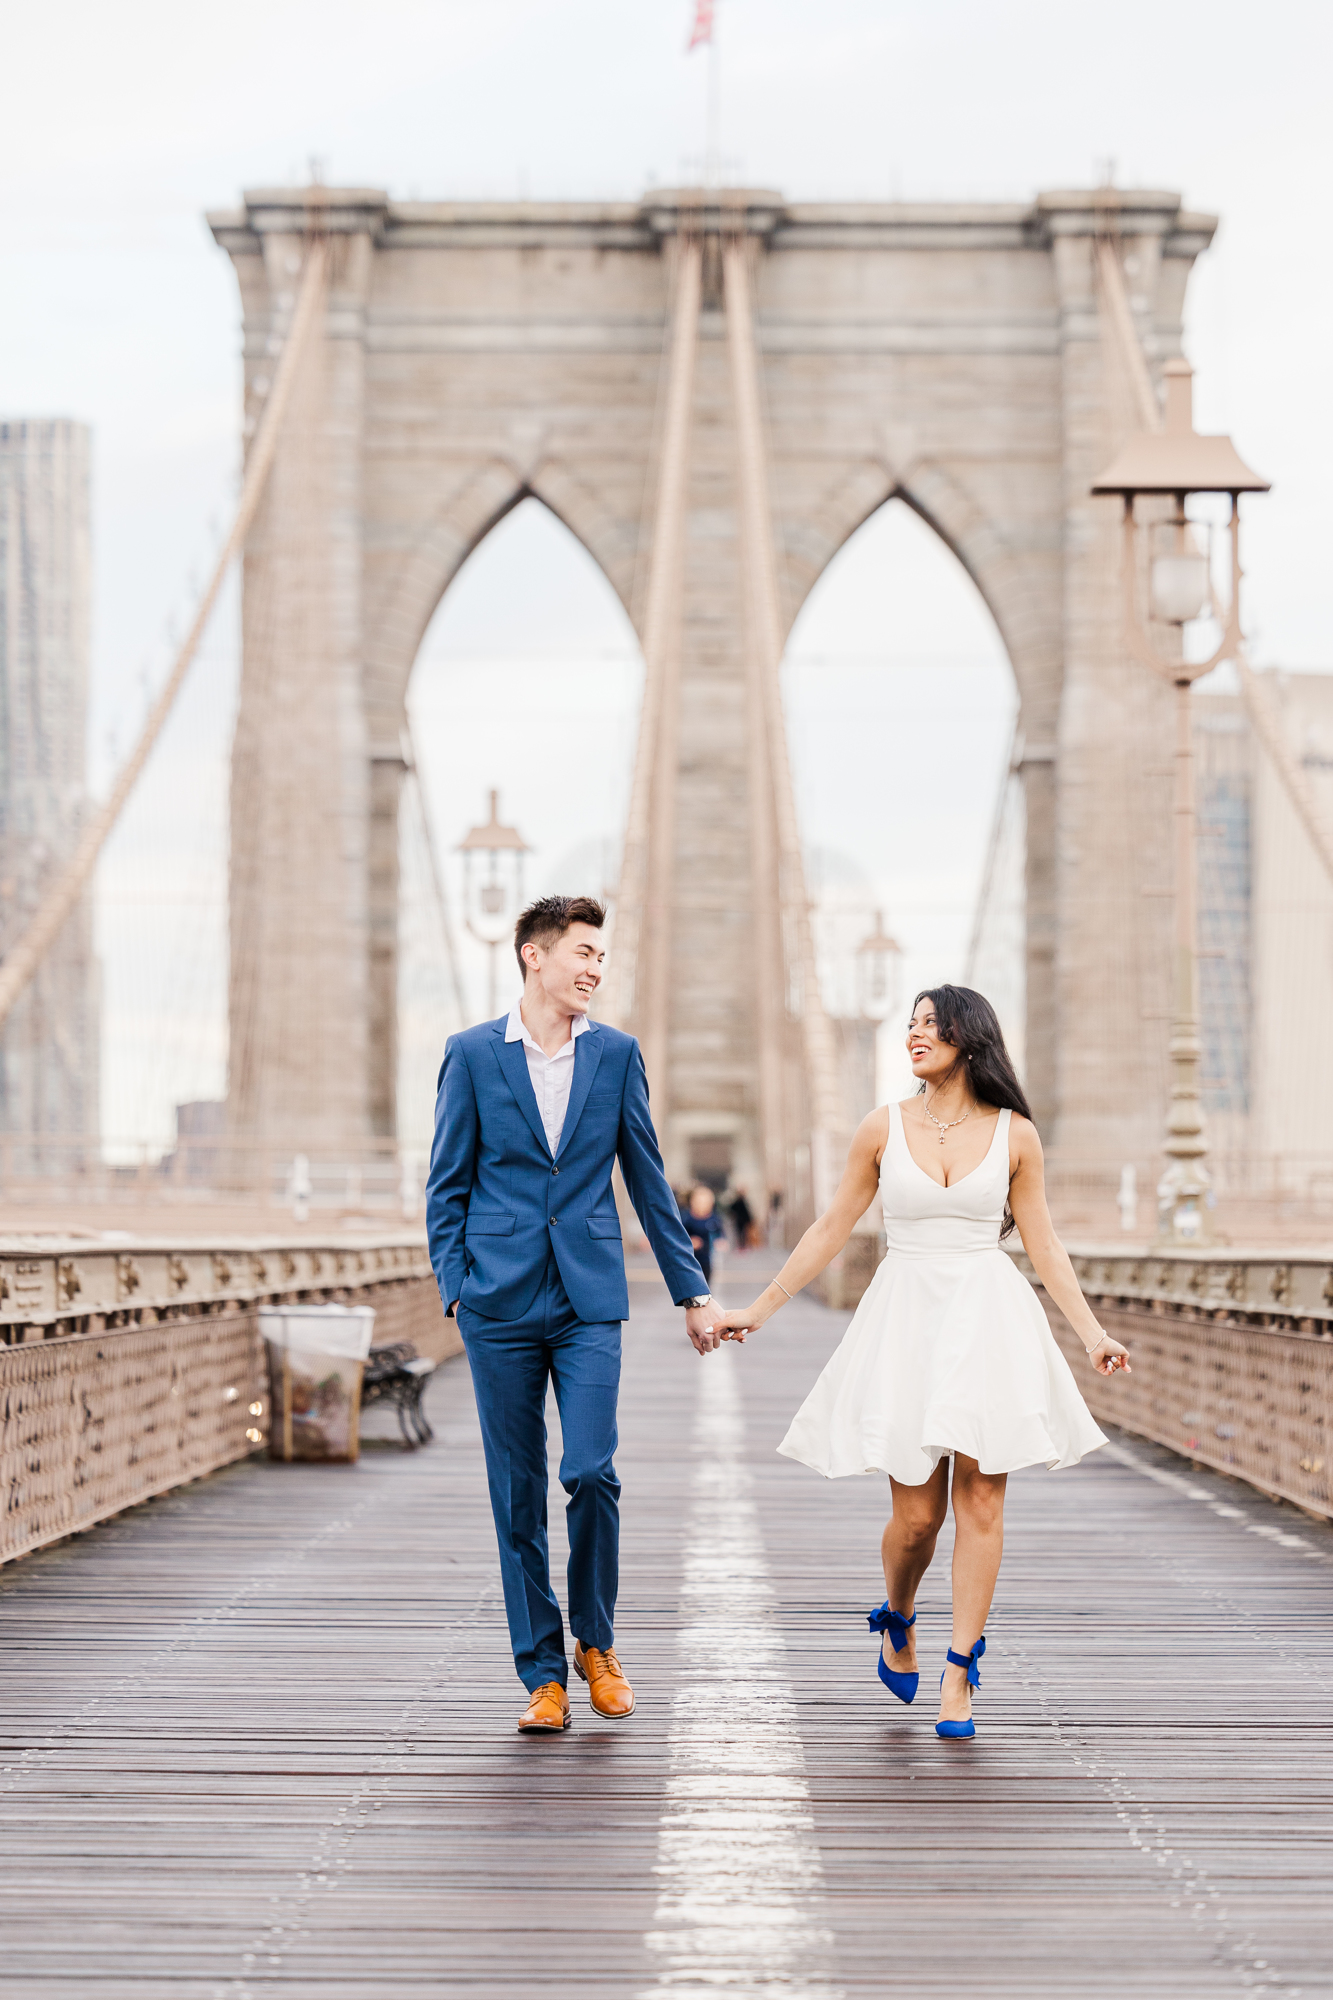 Iconic New York Engagement Photos on the Brooklyn Bridge